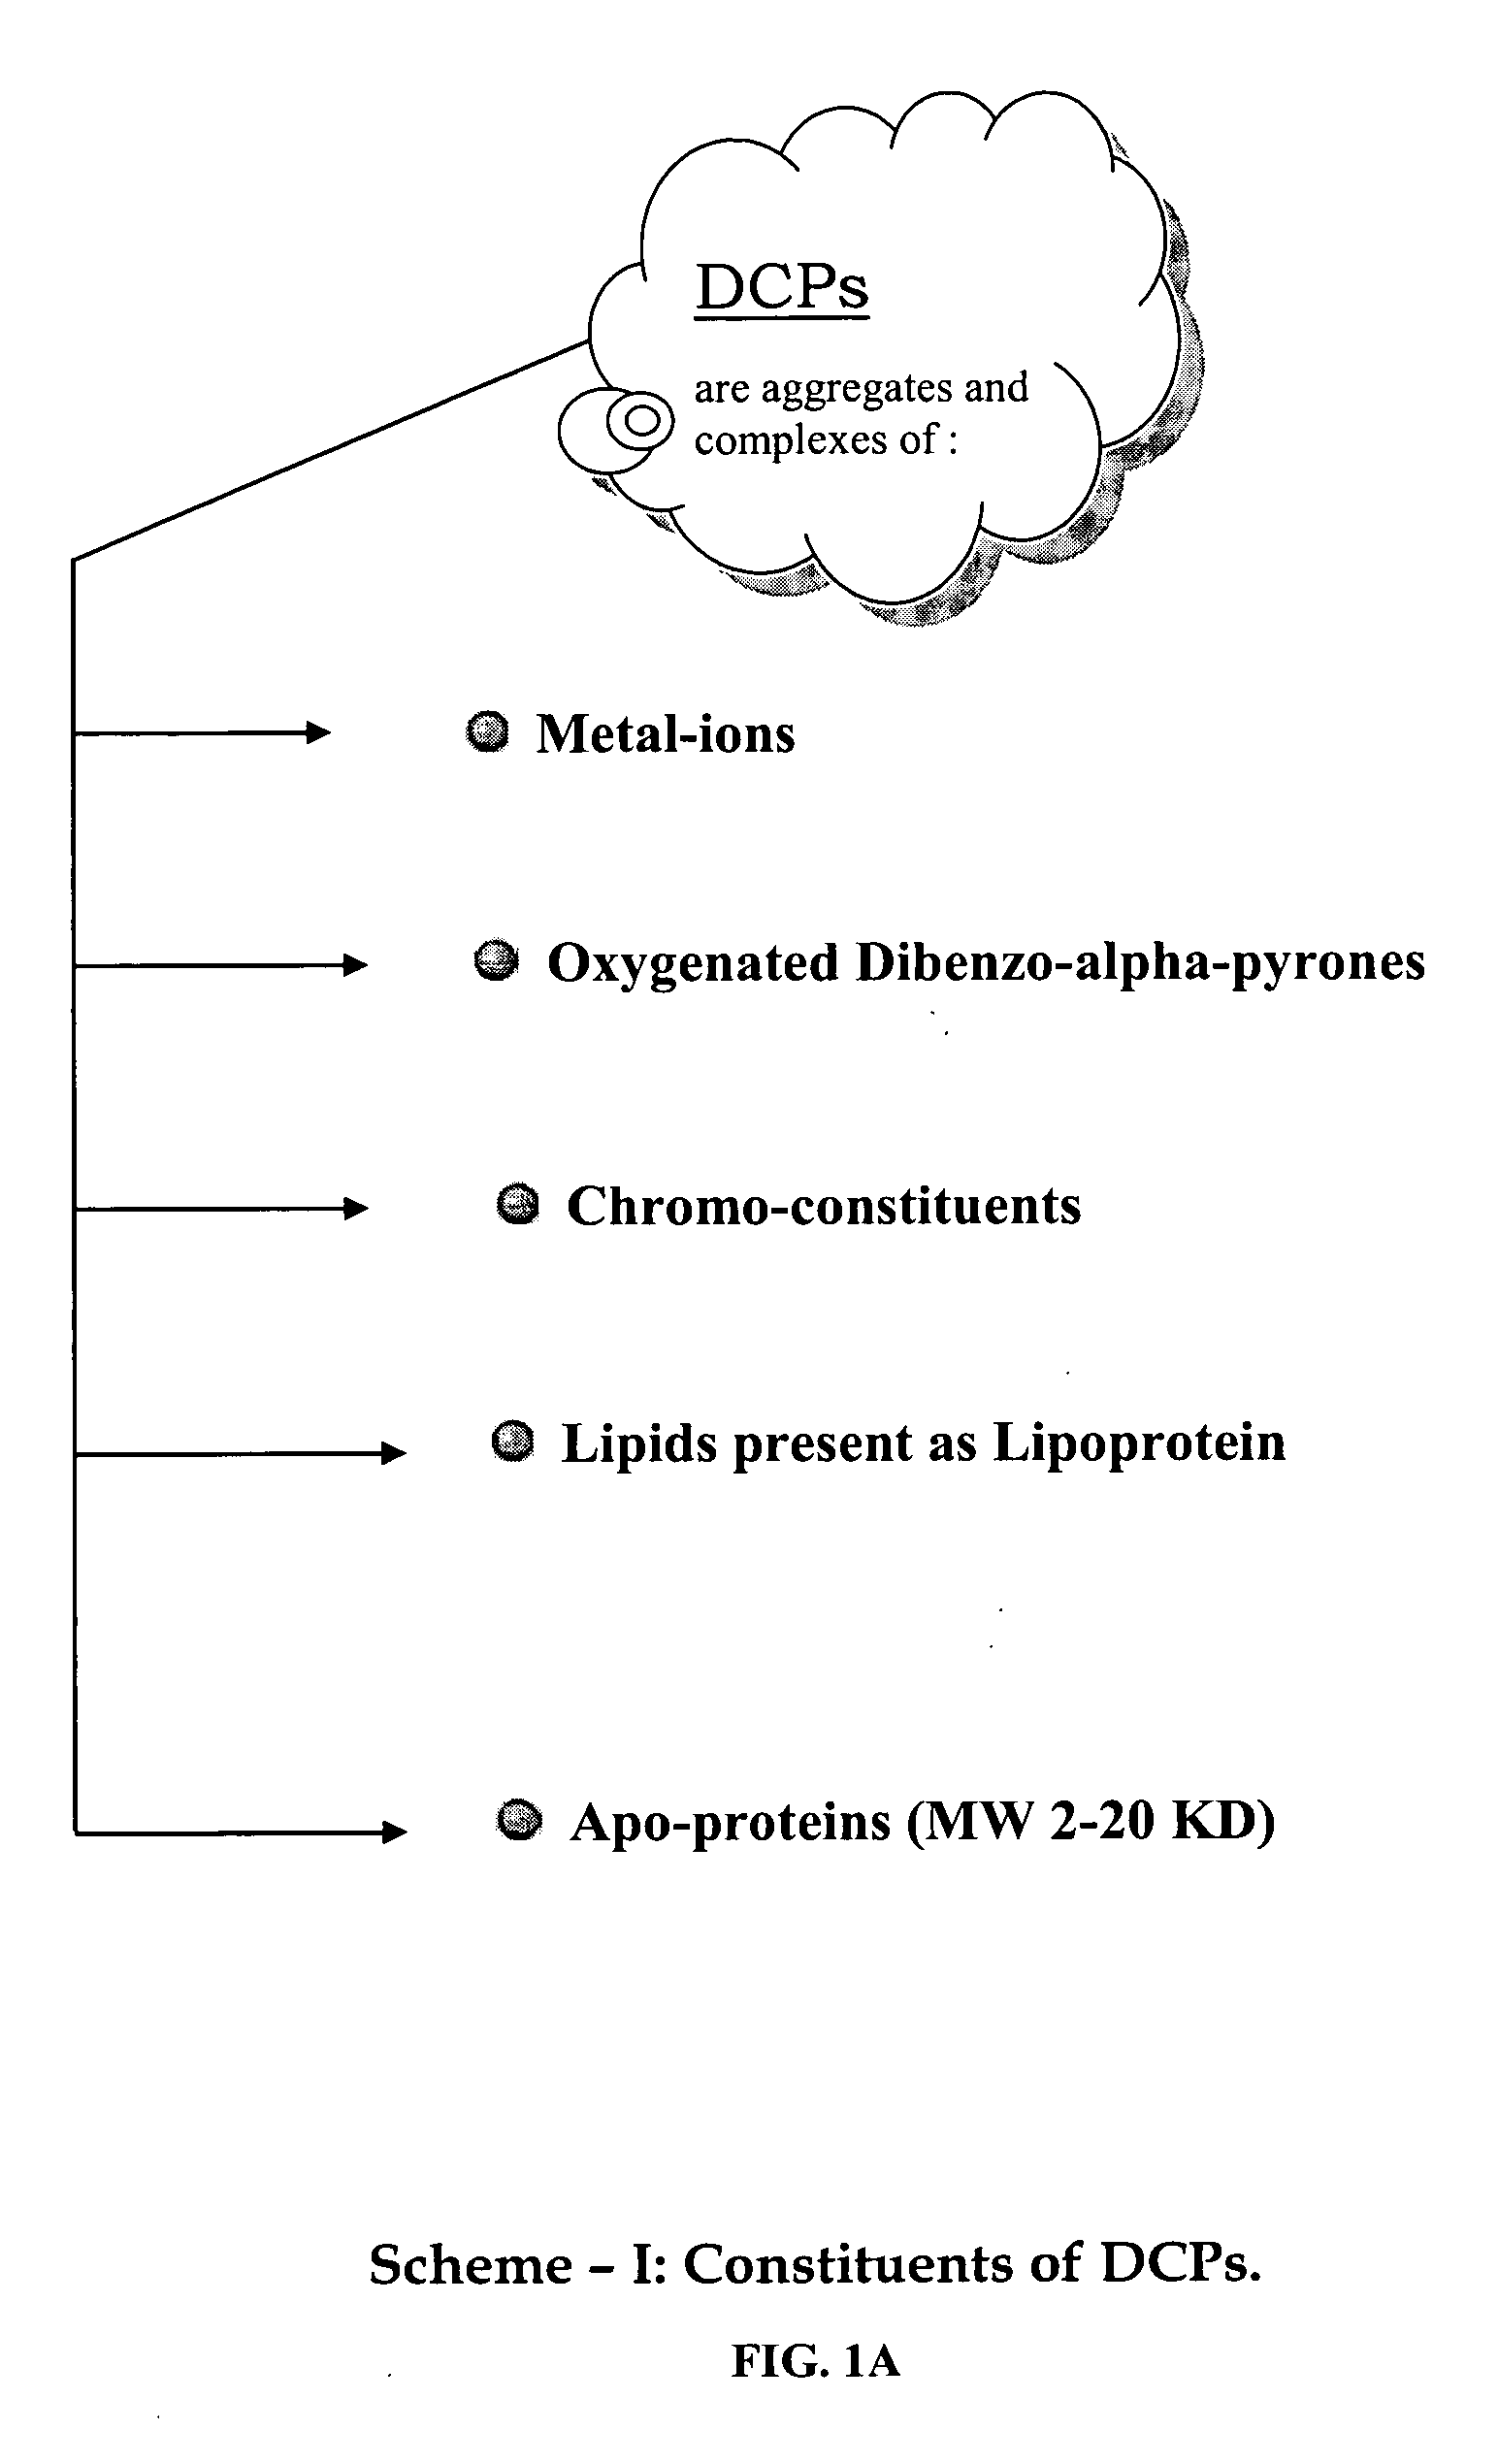 Oxygenated dibenzo-alpha-pyrone chromoproteins